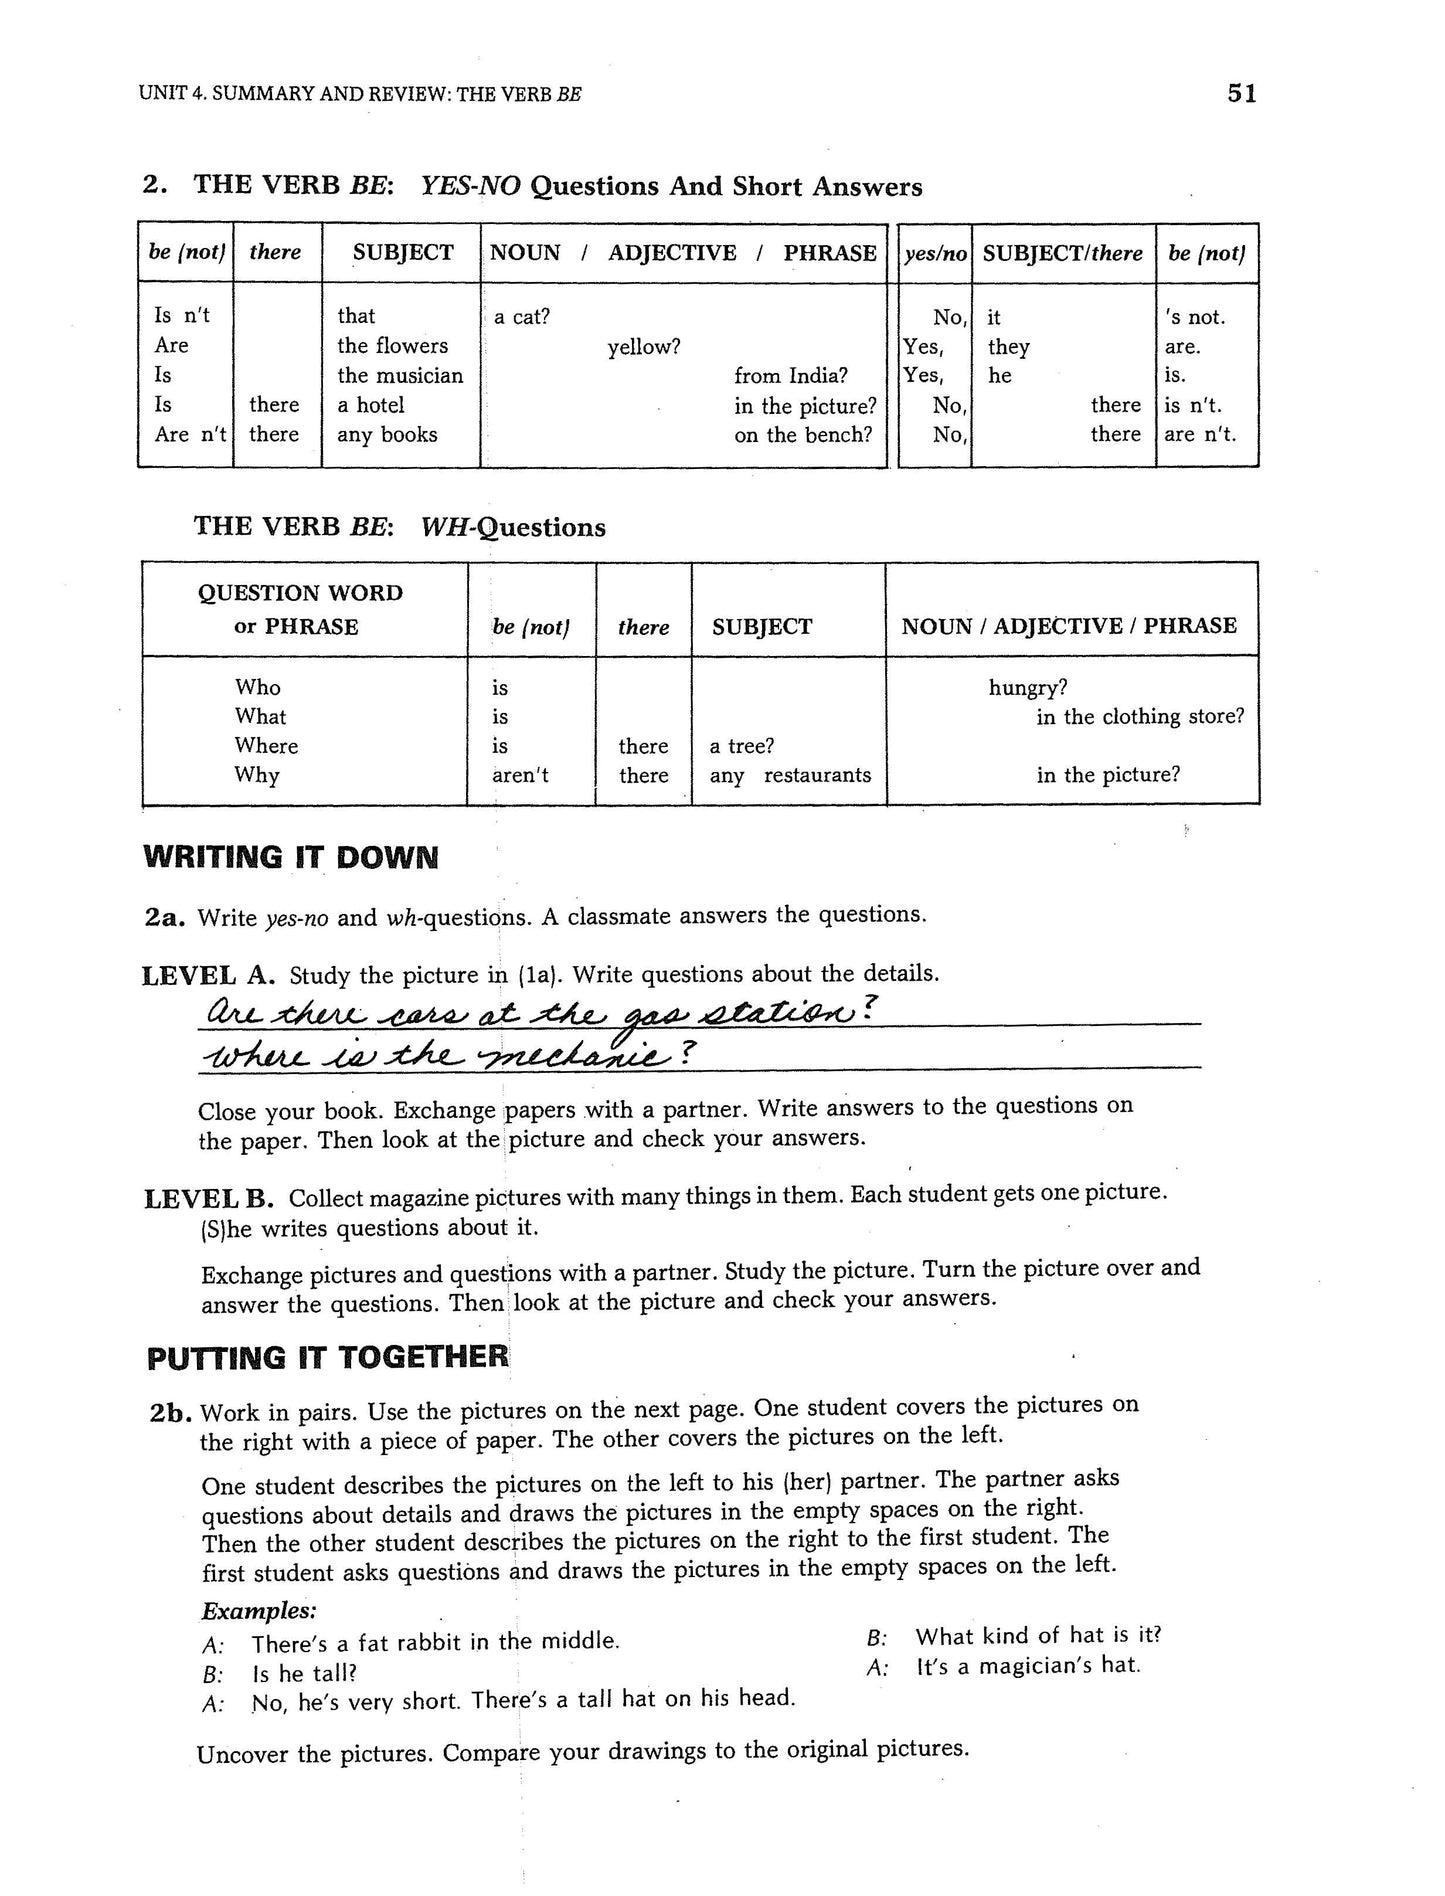 D-01.14 Analyze & Use BE-Sentence Patterns in Speech & Writing